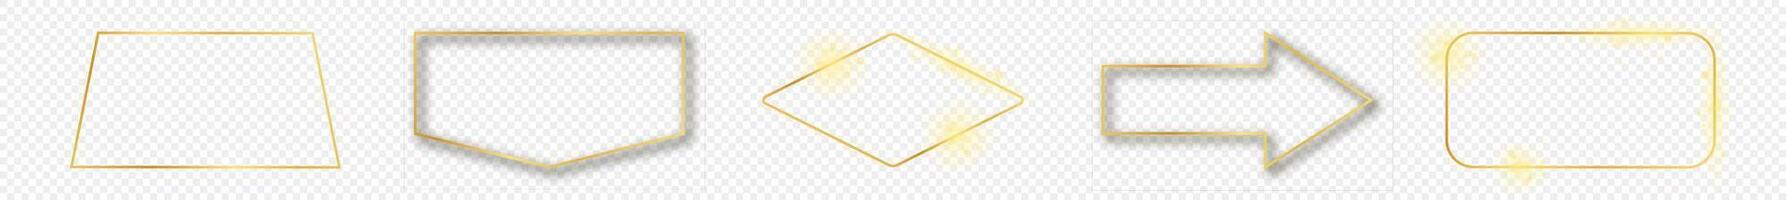 guld lysande annorlunda geometrisk form ram vektor